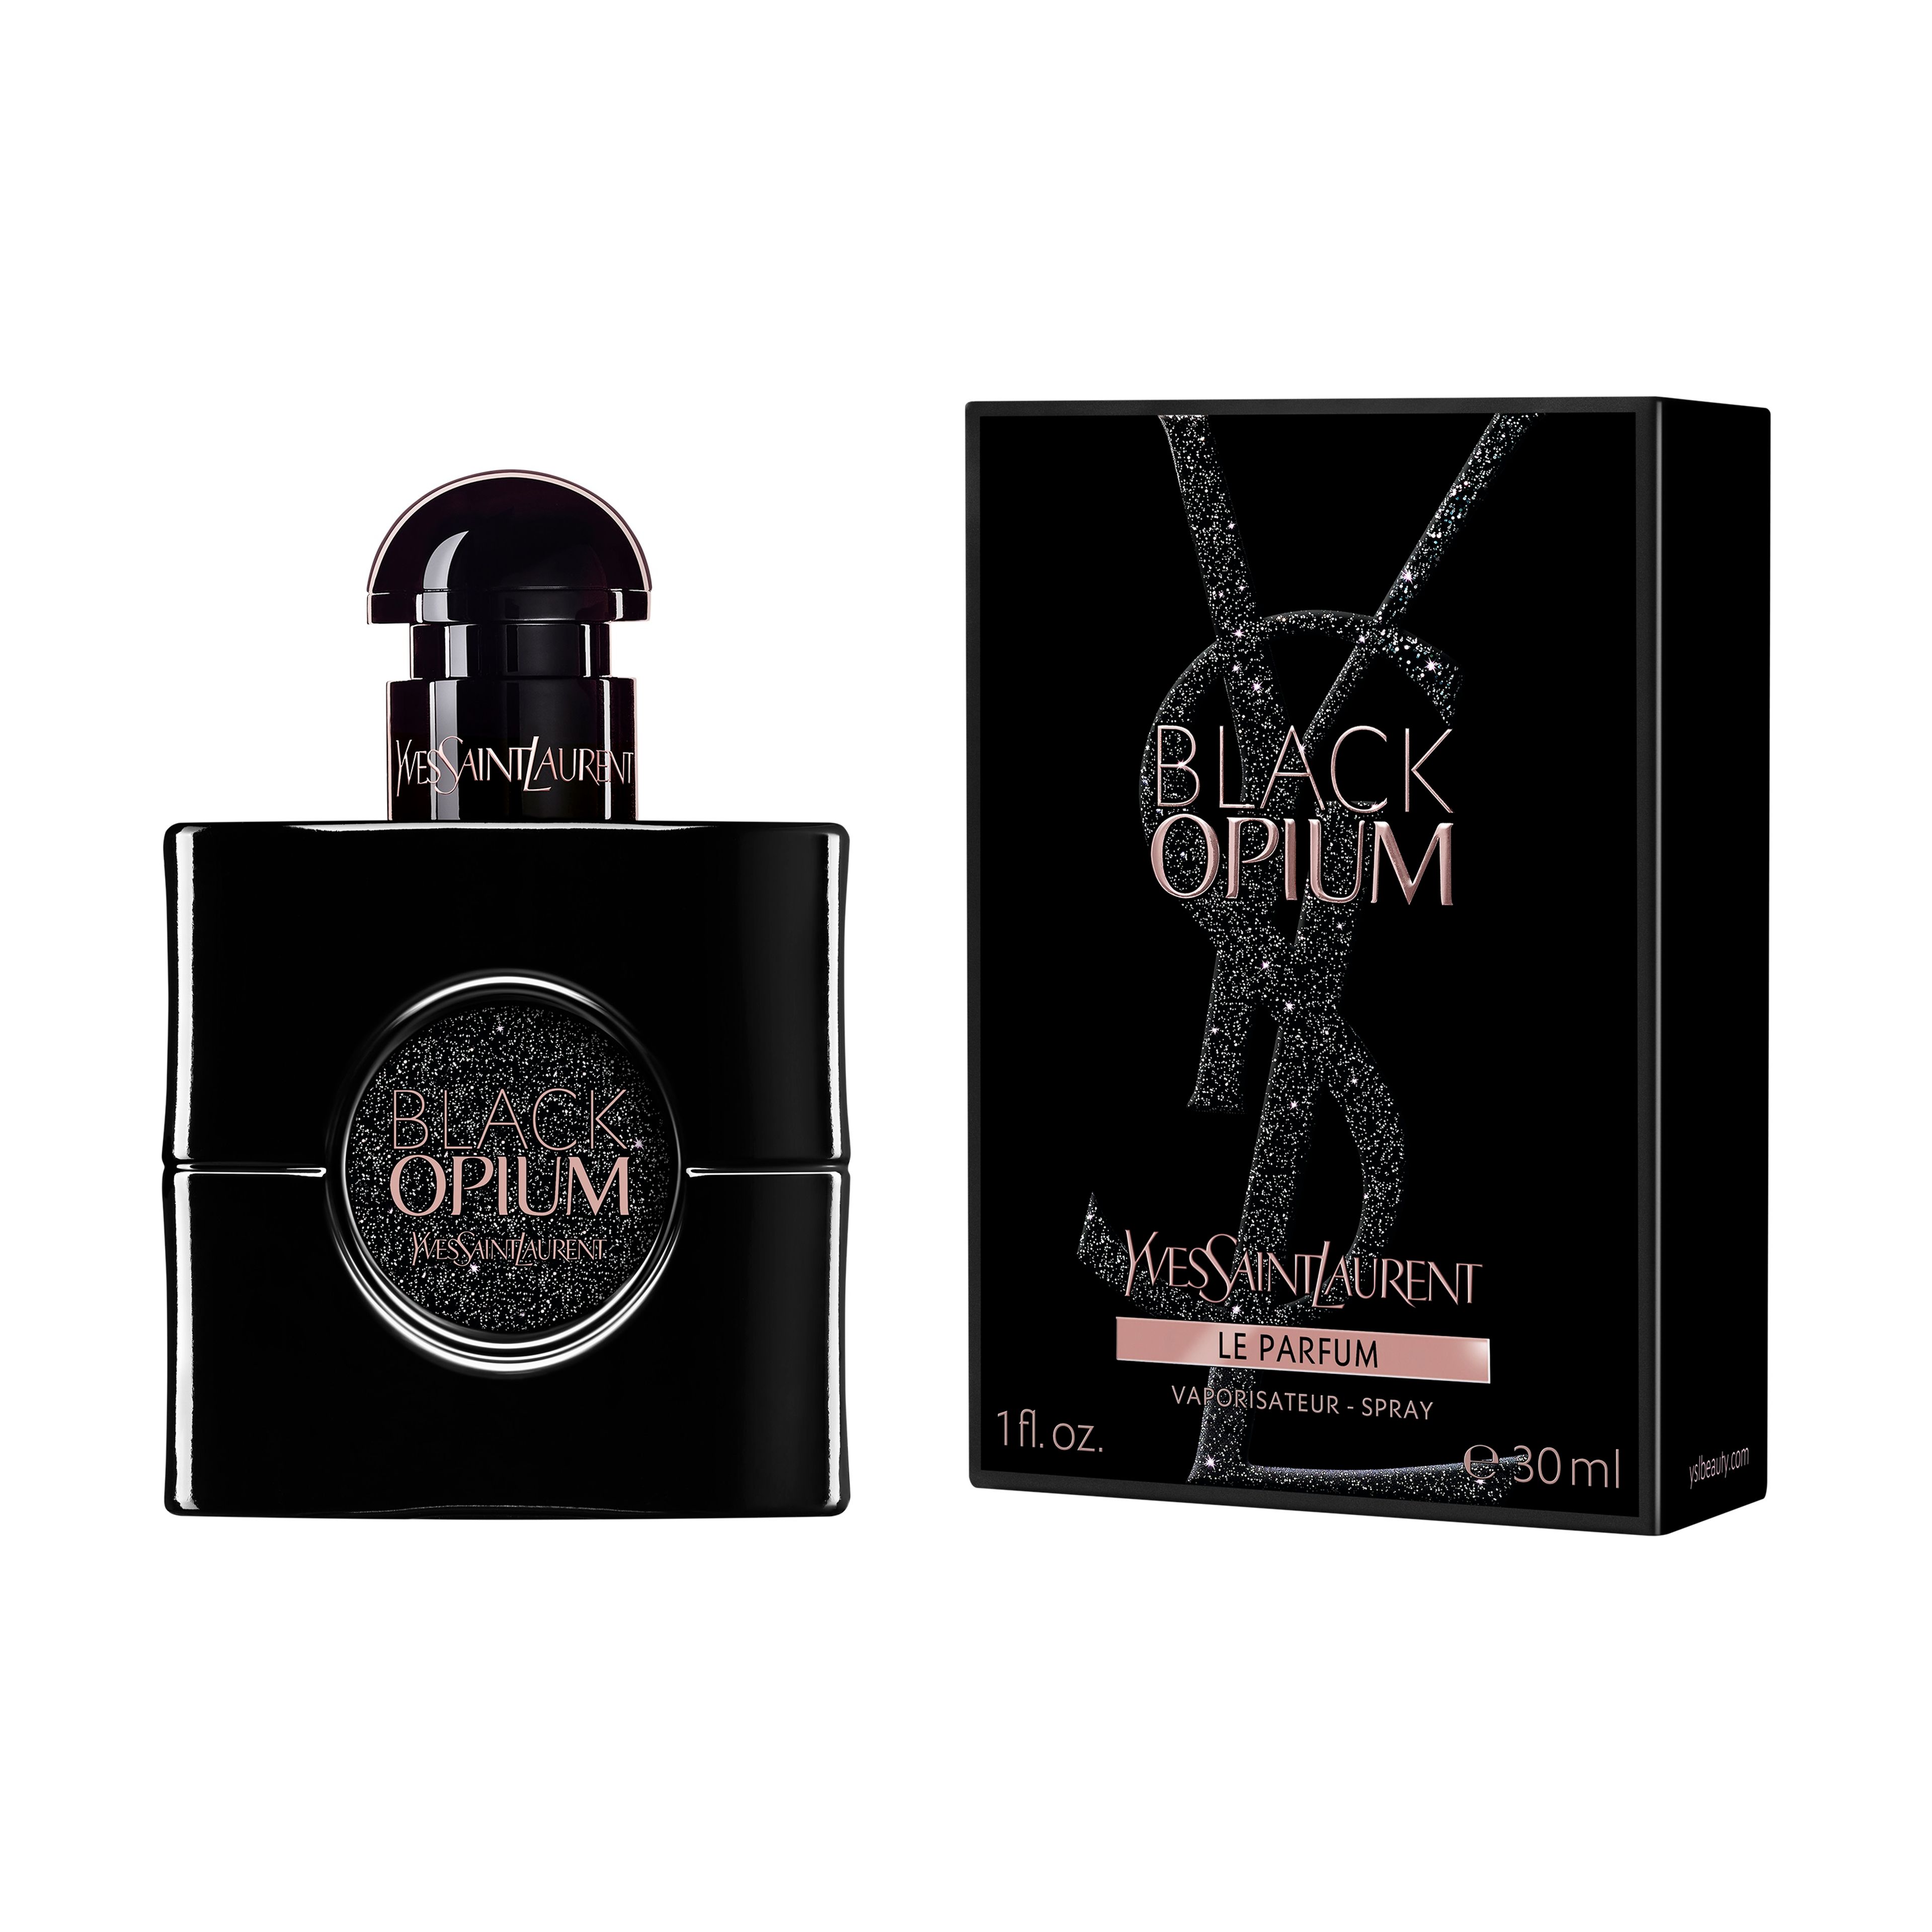 Yves Saint Laurent Ysl Black Opium Le Parfum 2